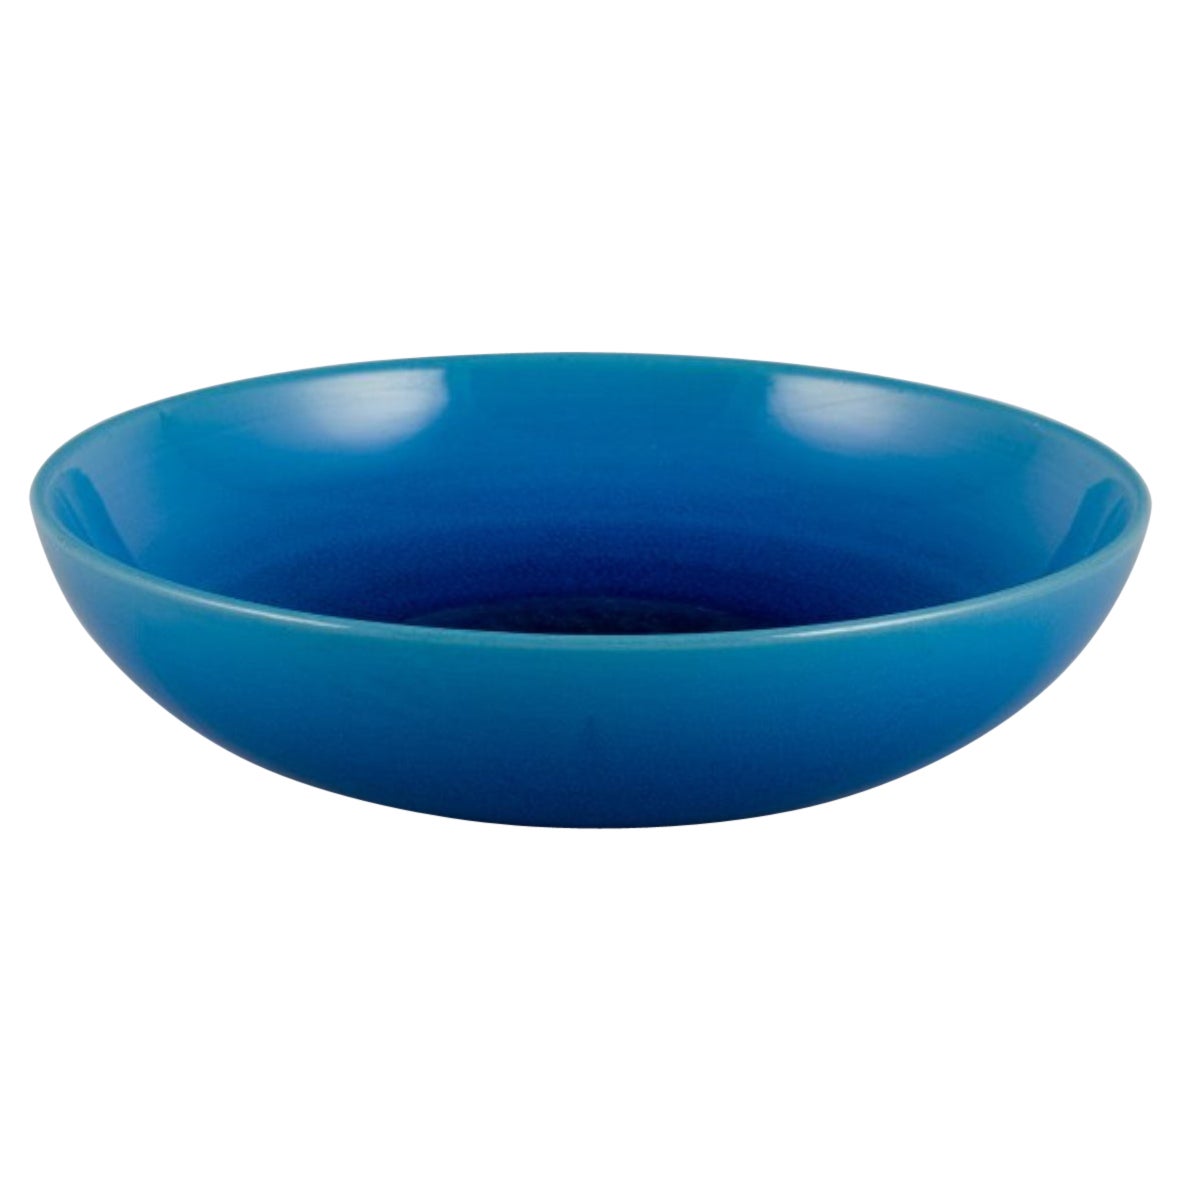 Carl Harry Stålhane for Rörstrand. Ceramic bowl in turquoise glaze. For Sale